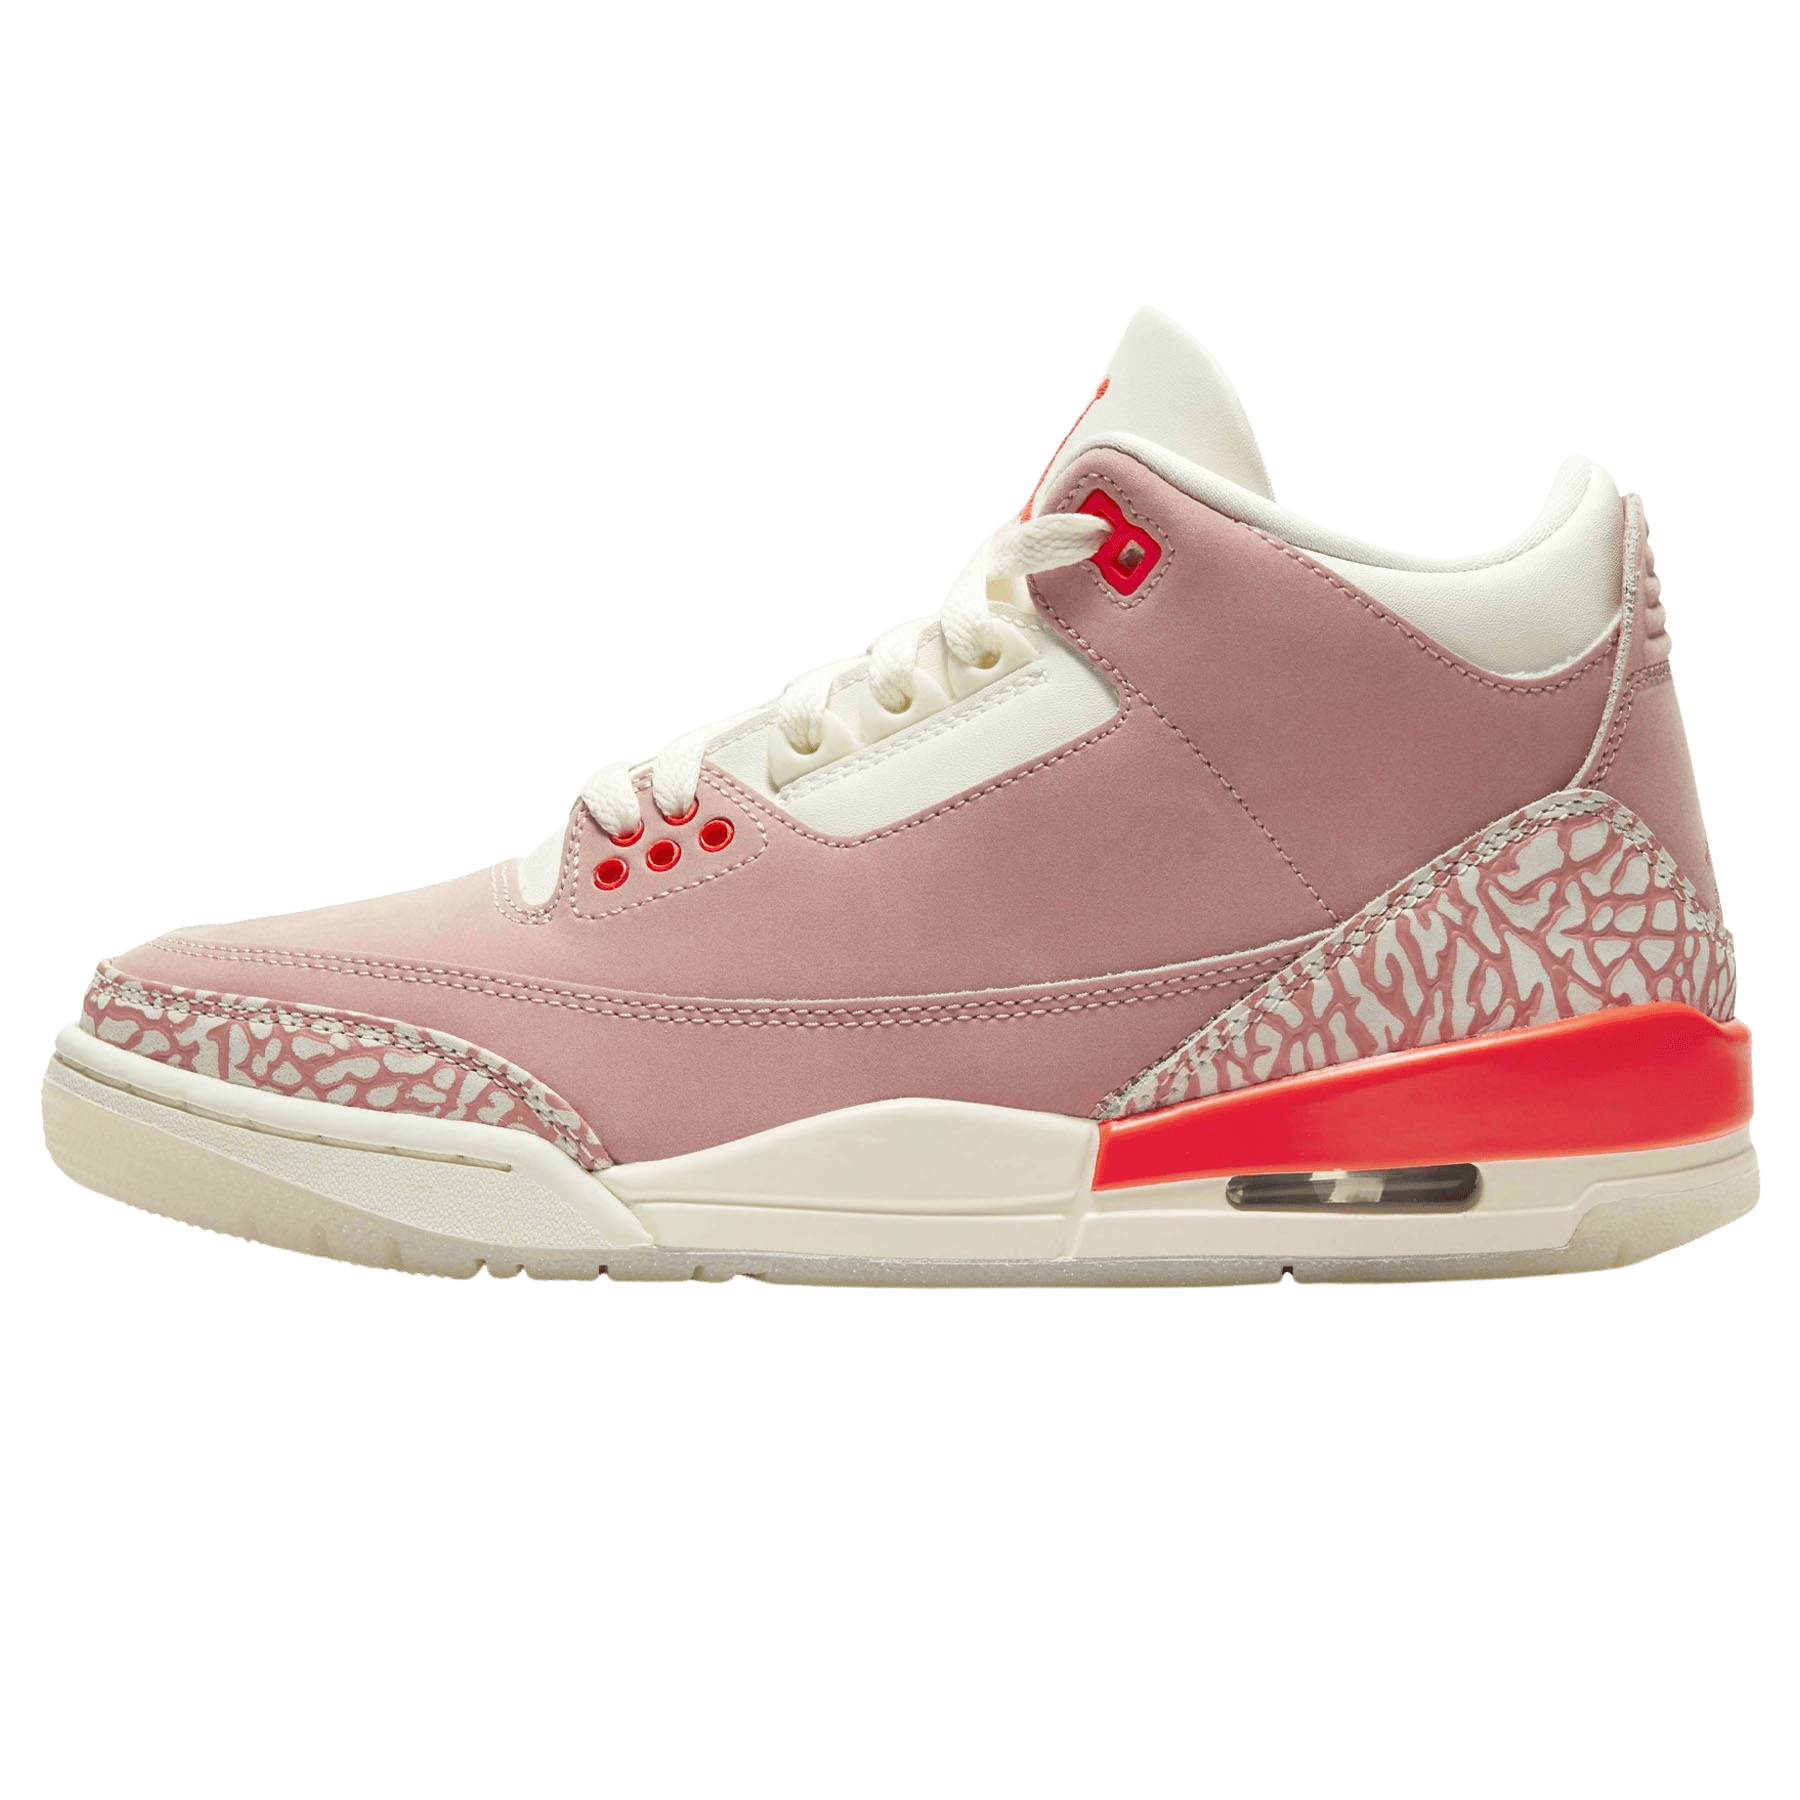 Air Jordan 3 Retro Wmns Rust Pink CK9246 600